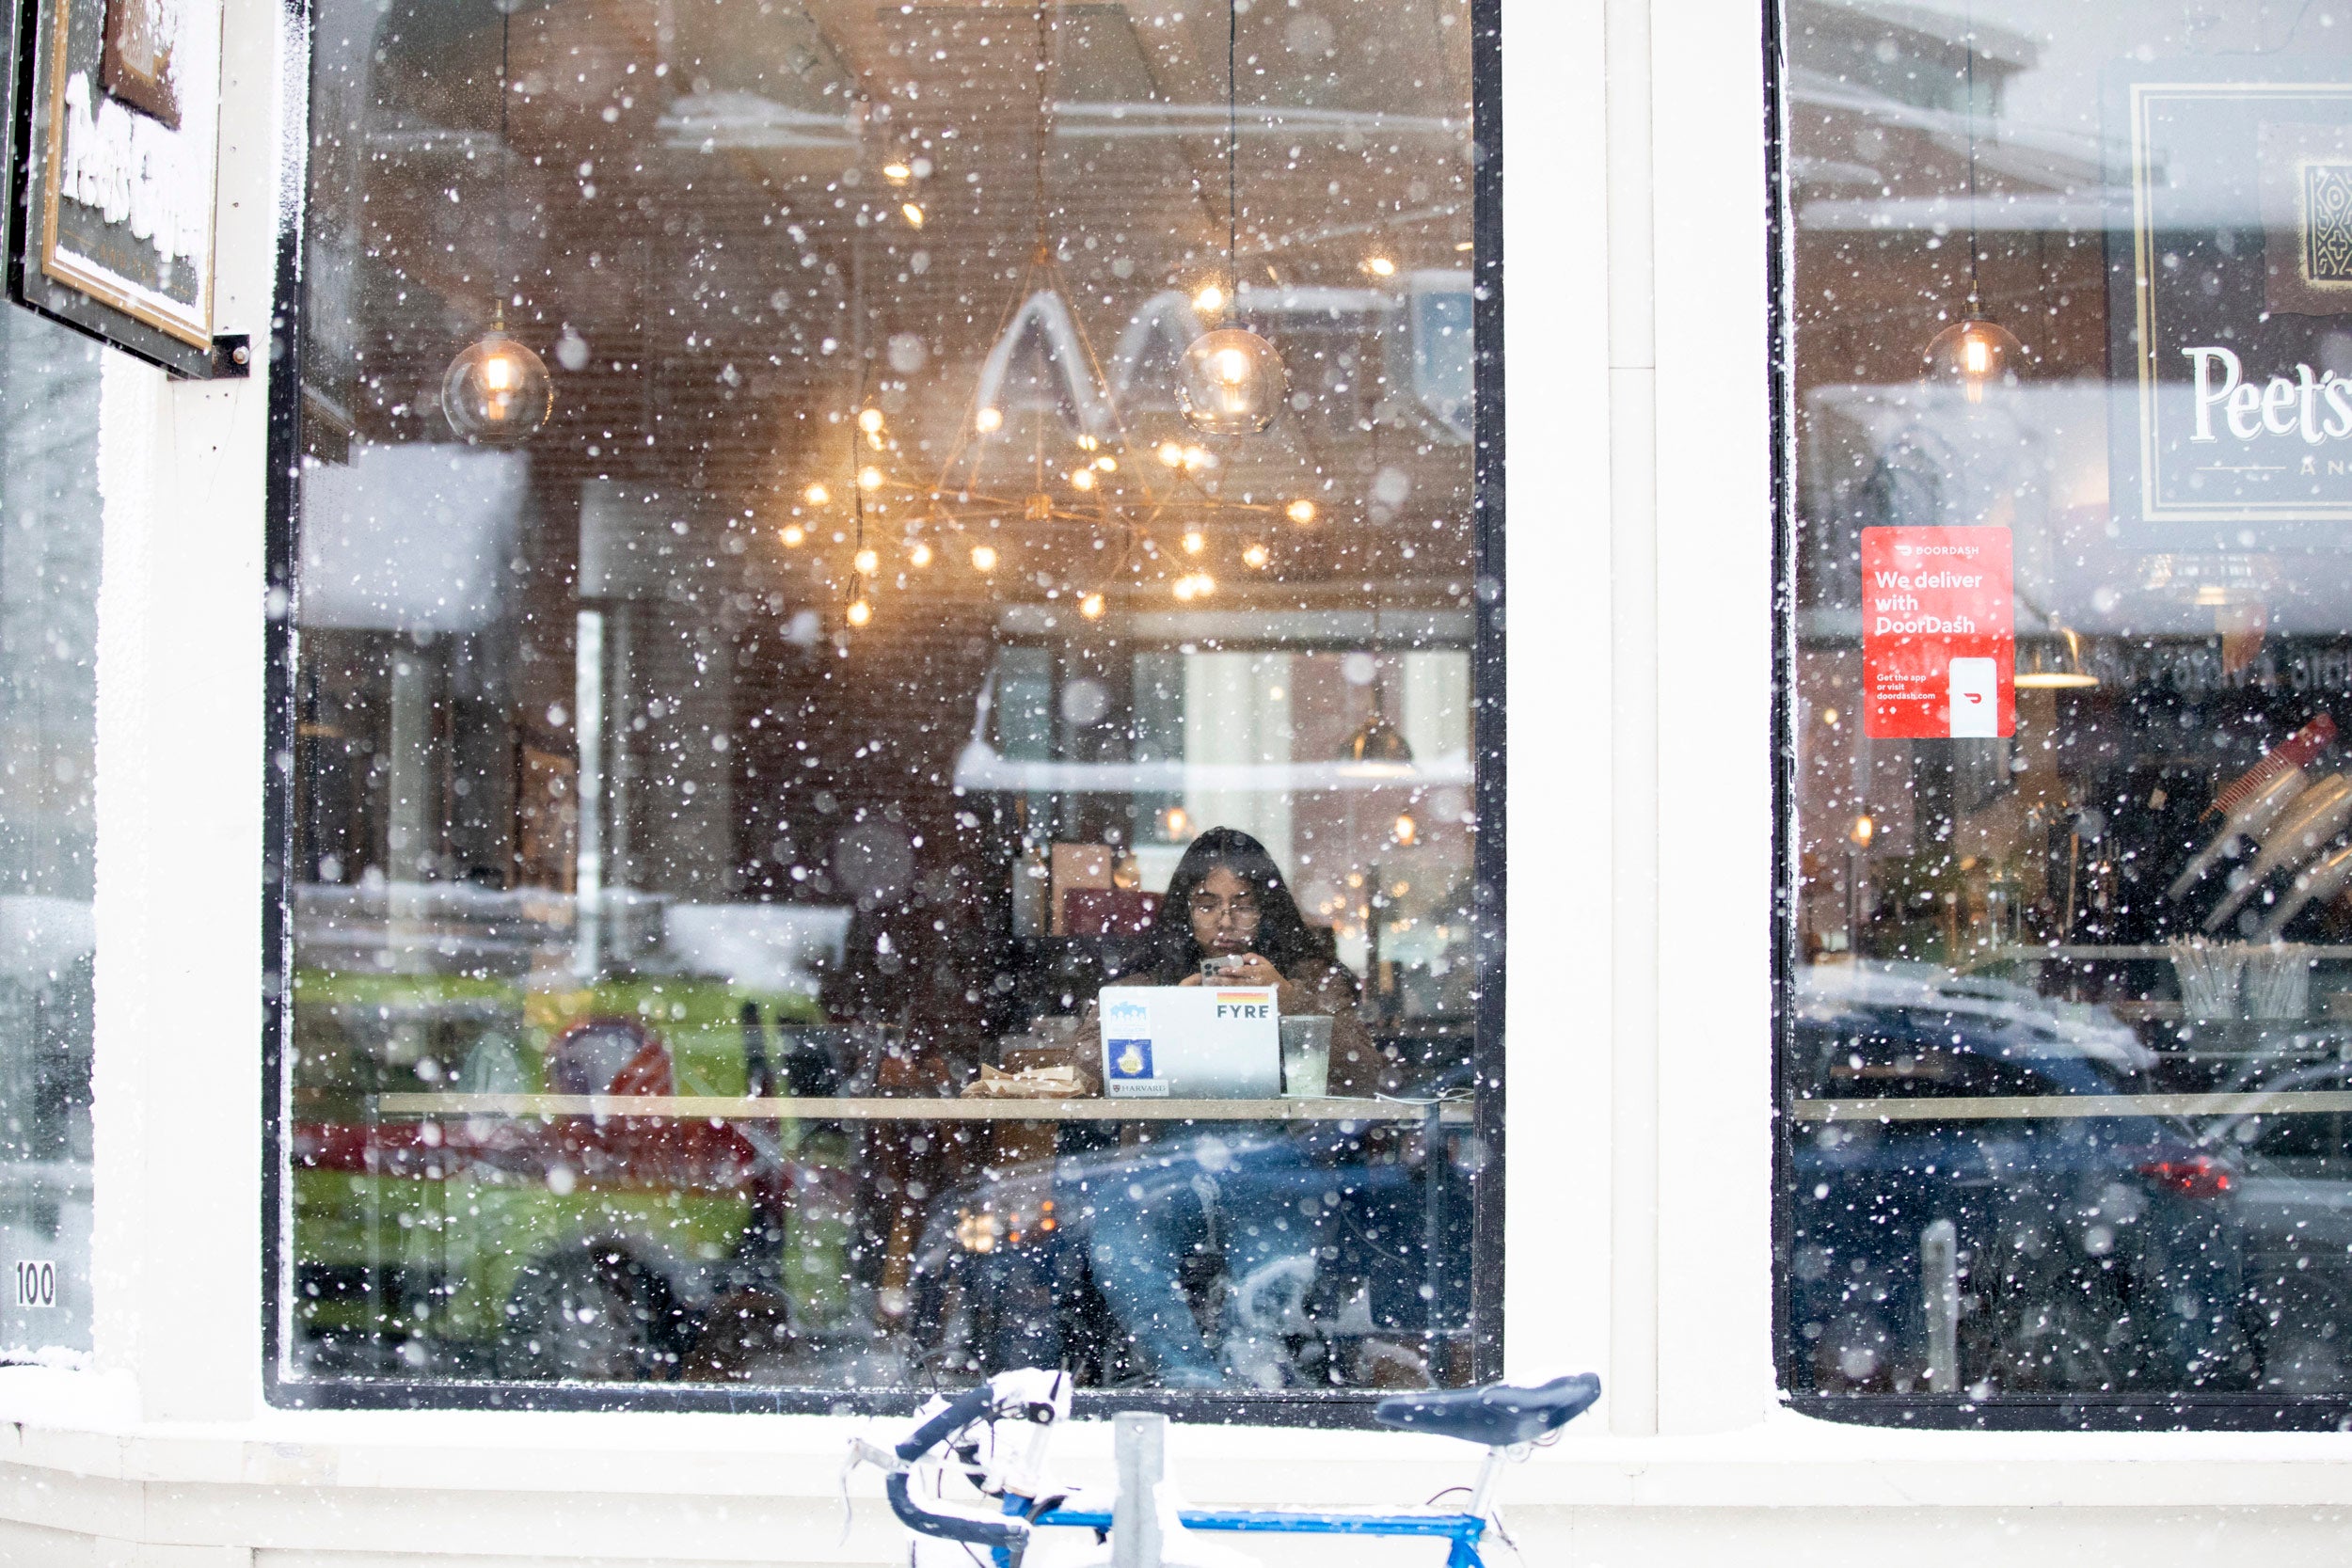 Snow falling outside a coffee shop.